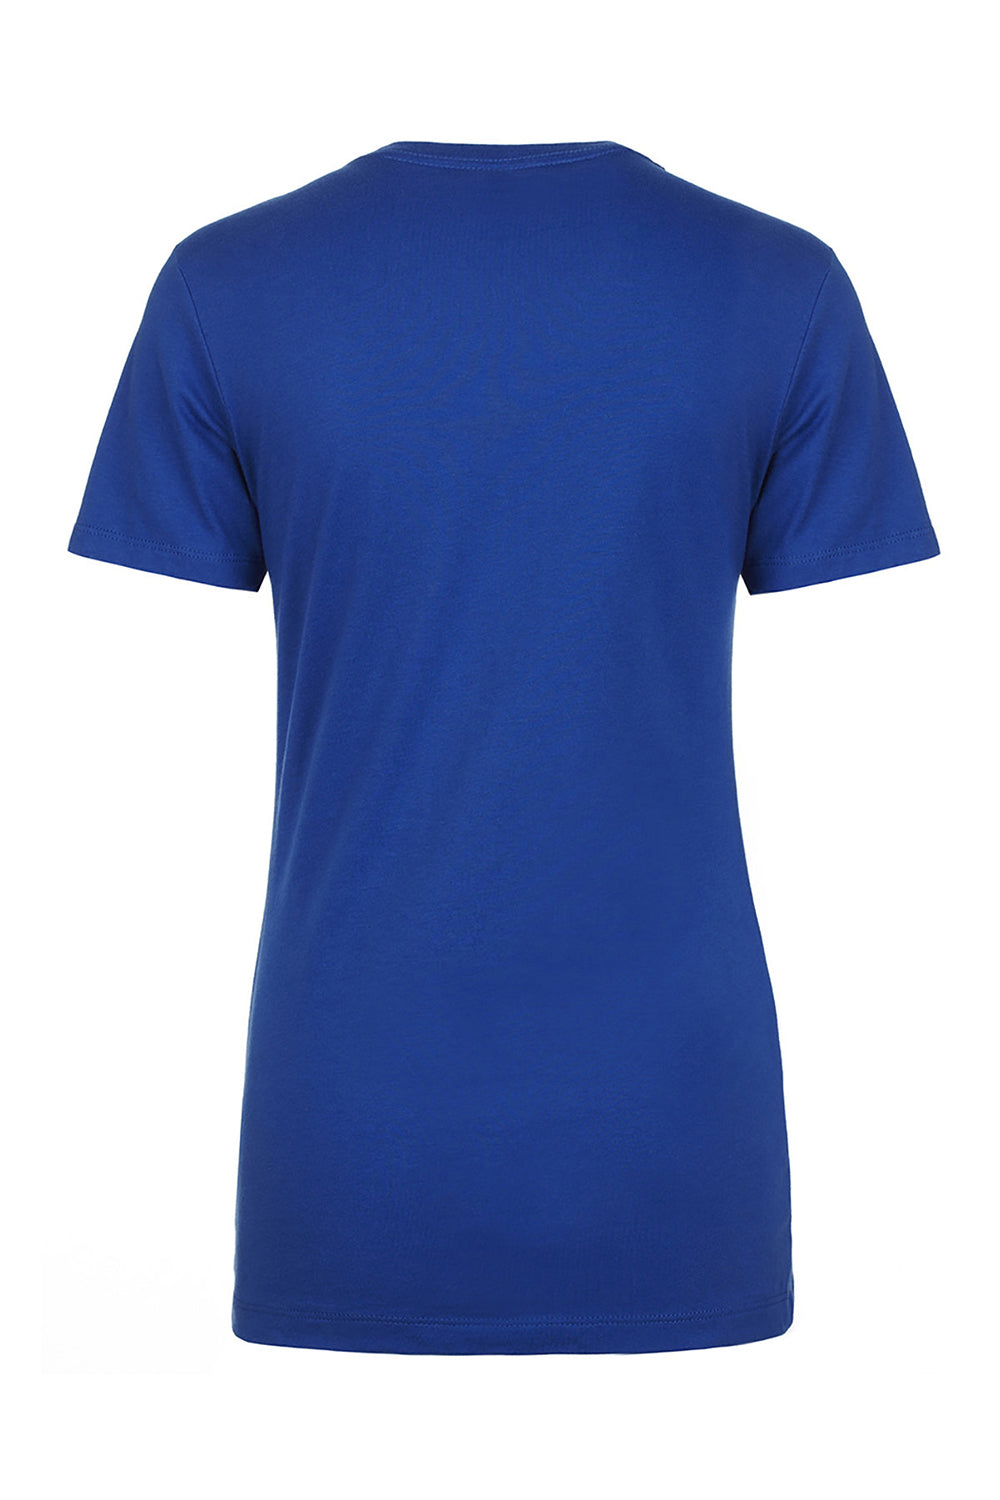 Next Level N1510/1510 Womens Ideal Jersey Short Sleeve Crewneck T-Shirt Royal Blue Flat Back